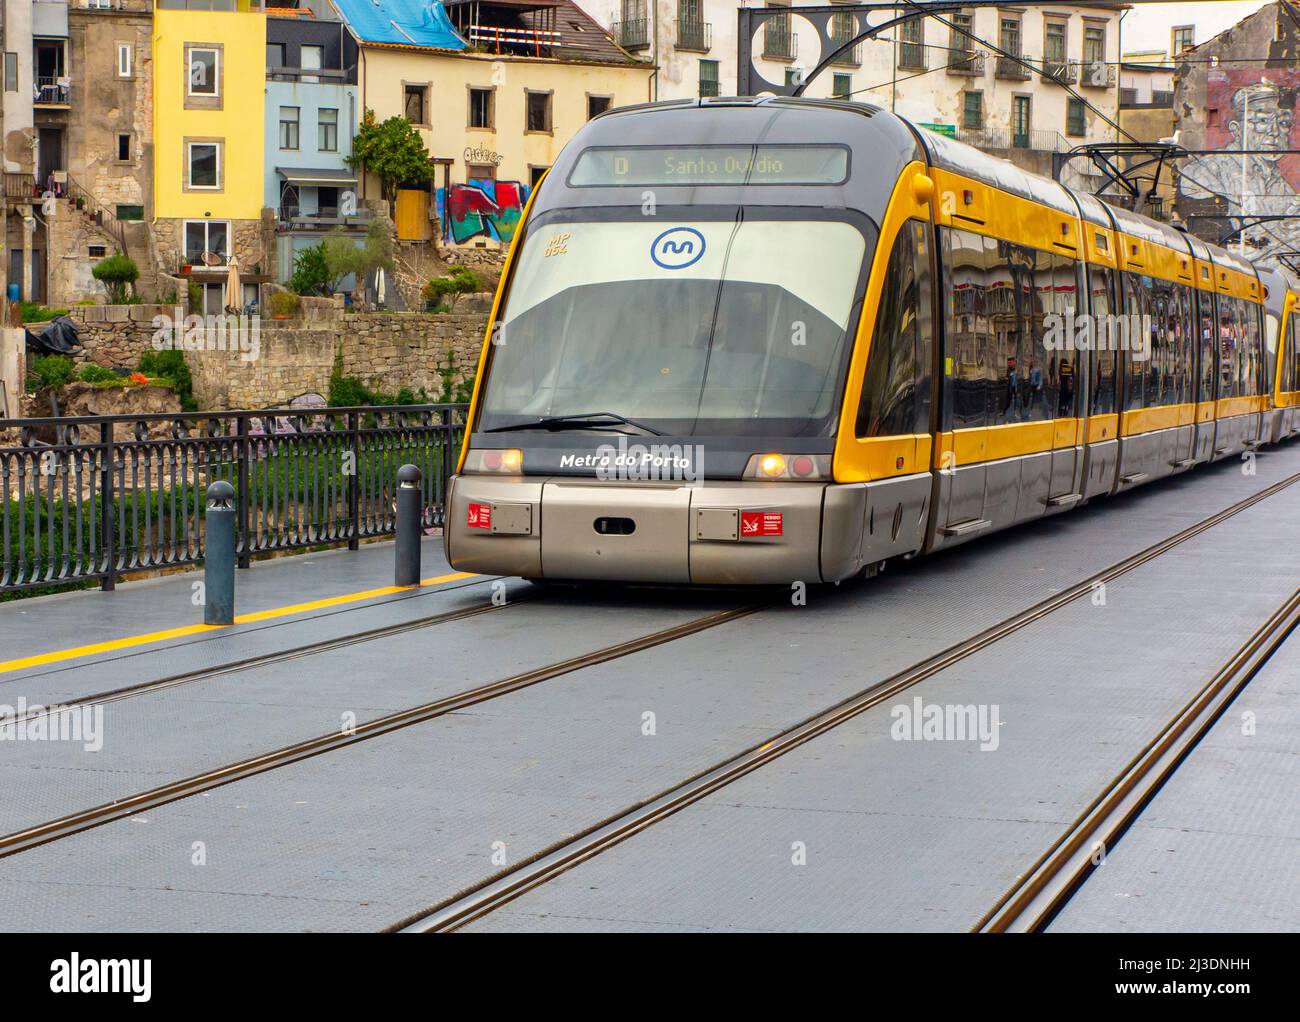 Metro do Porto tram on Line D crossing Ponte Luiz 1 bridge over the River Douro in Porto Portugal. Stock Photo